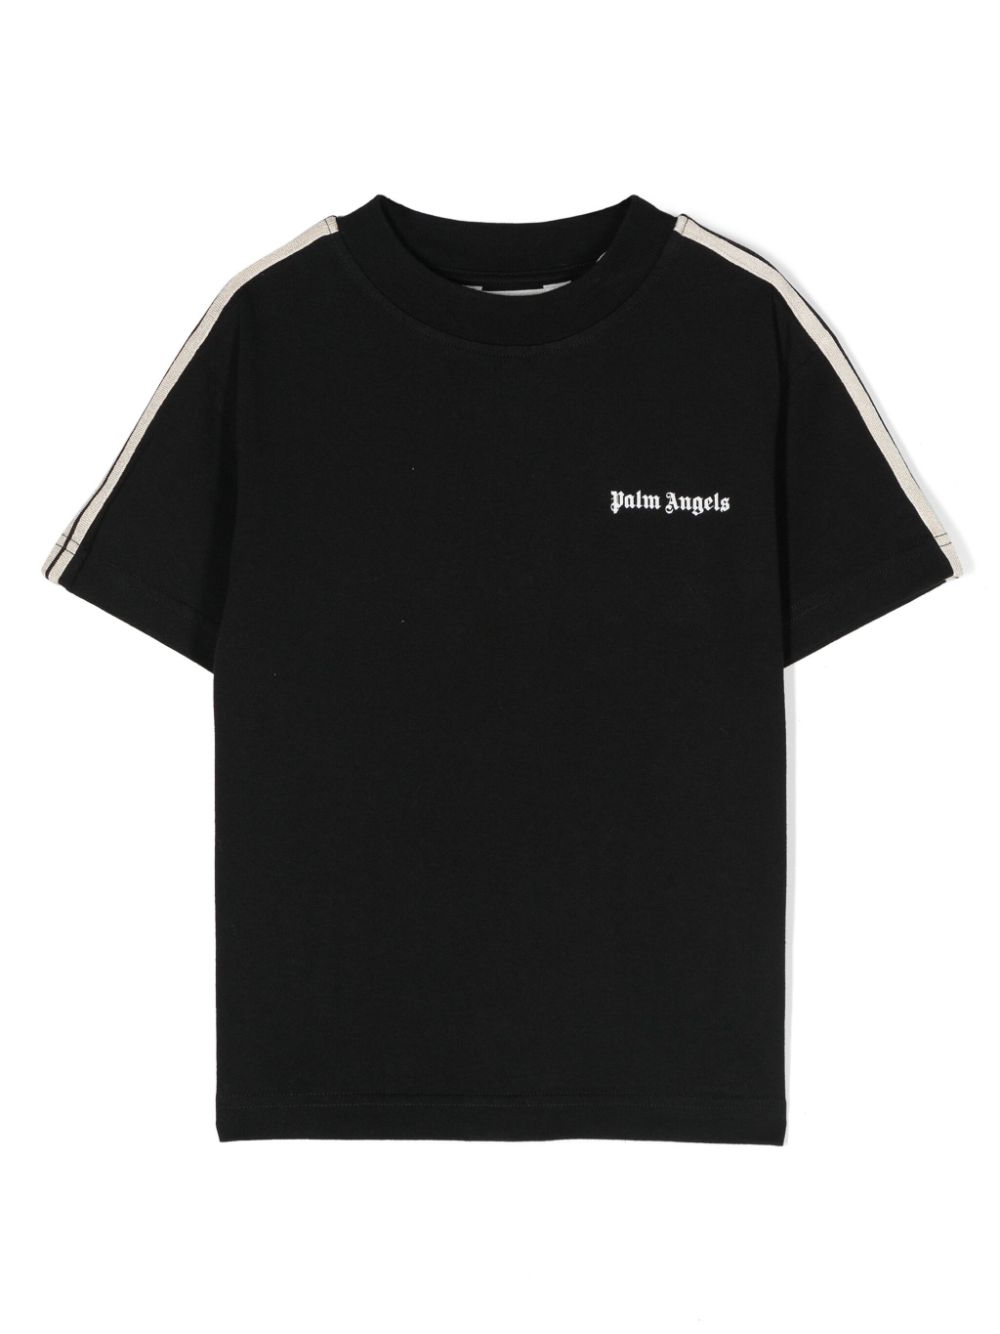 T-shirt nera per bambino con logo